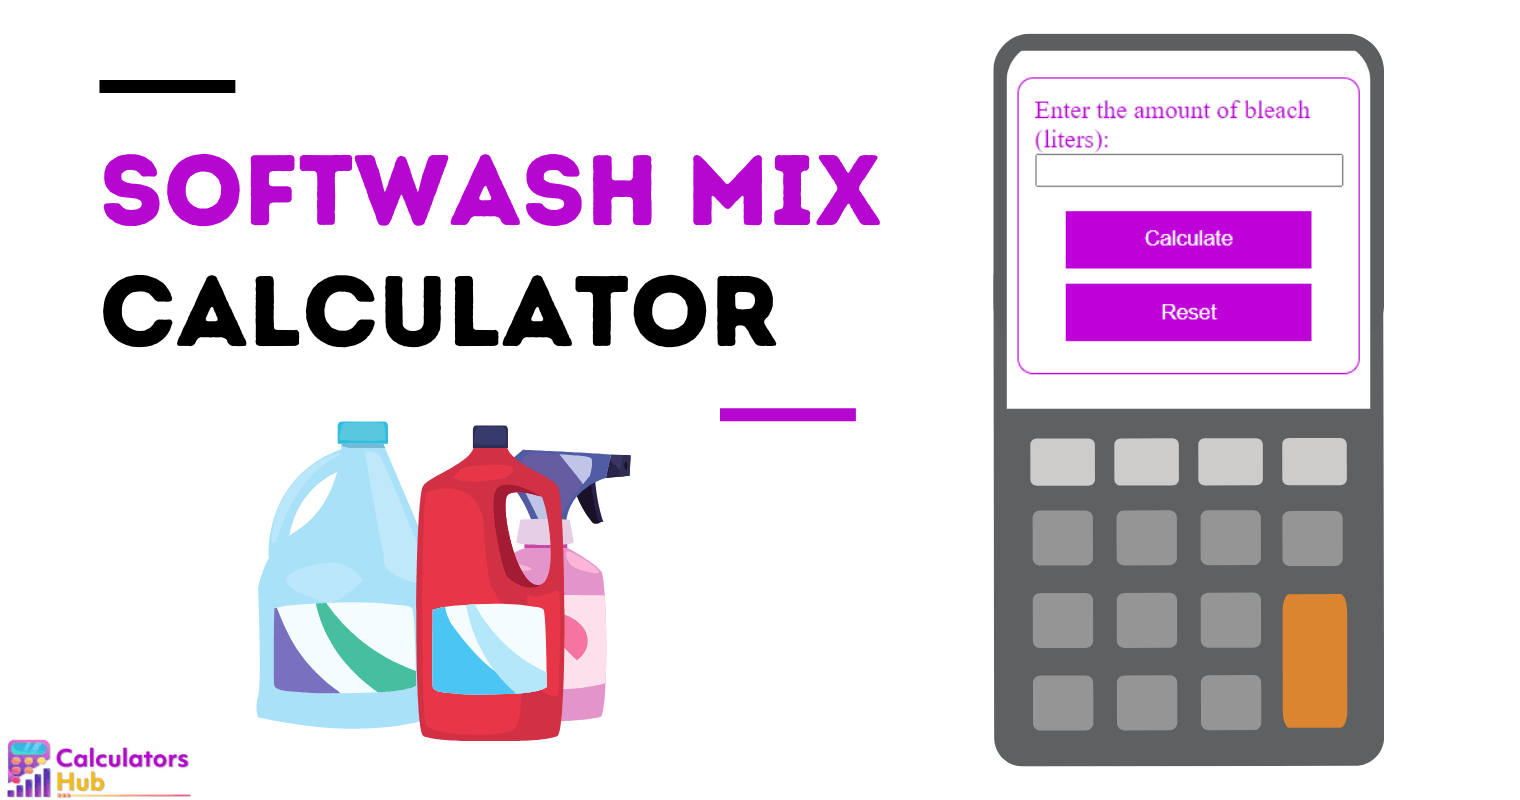 Softwash Mix Calculator